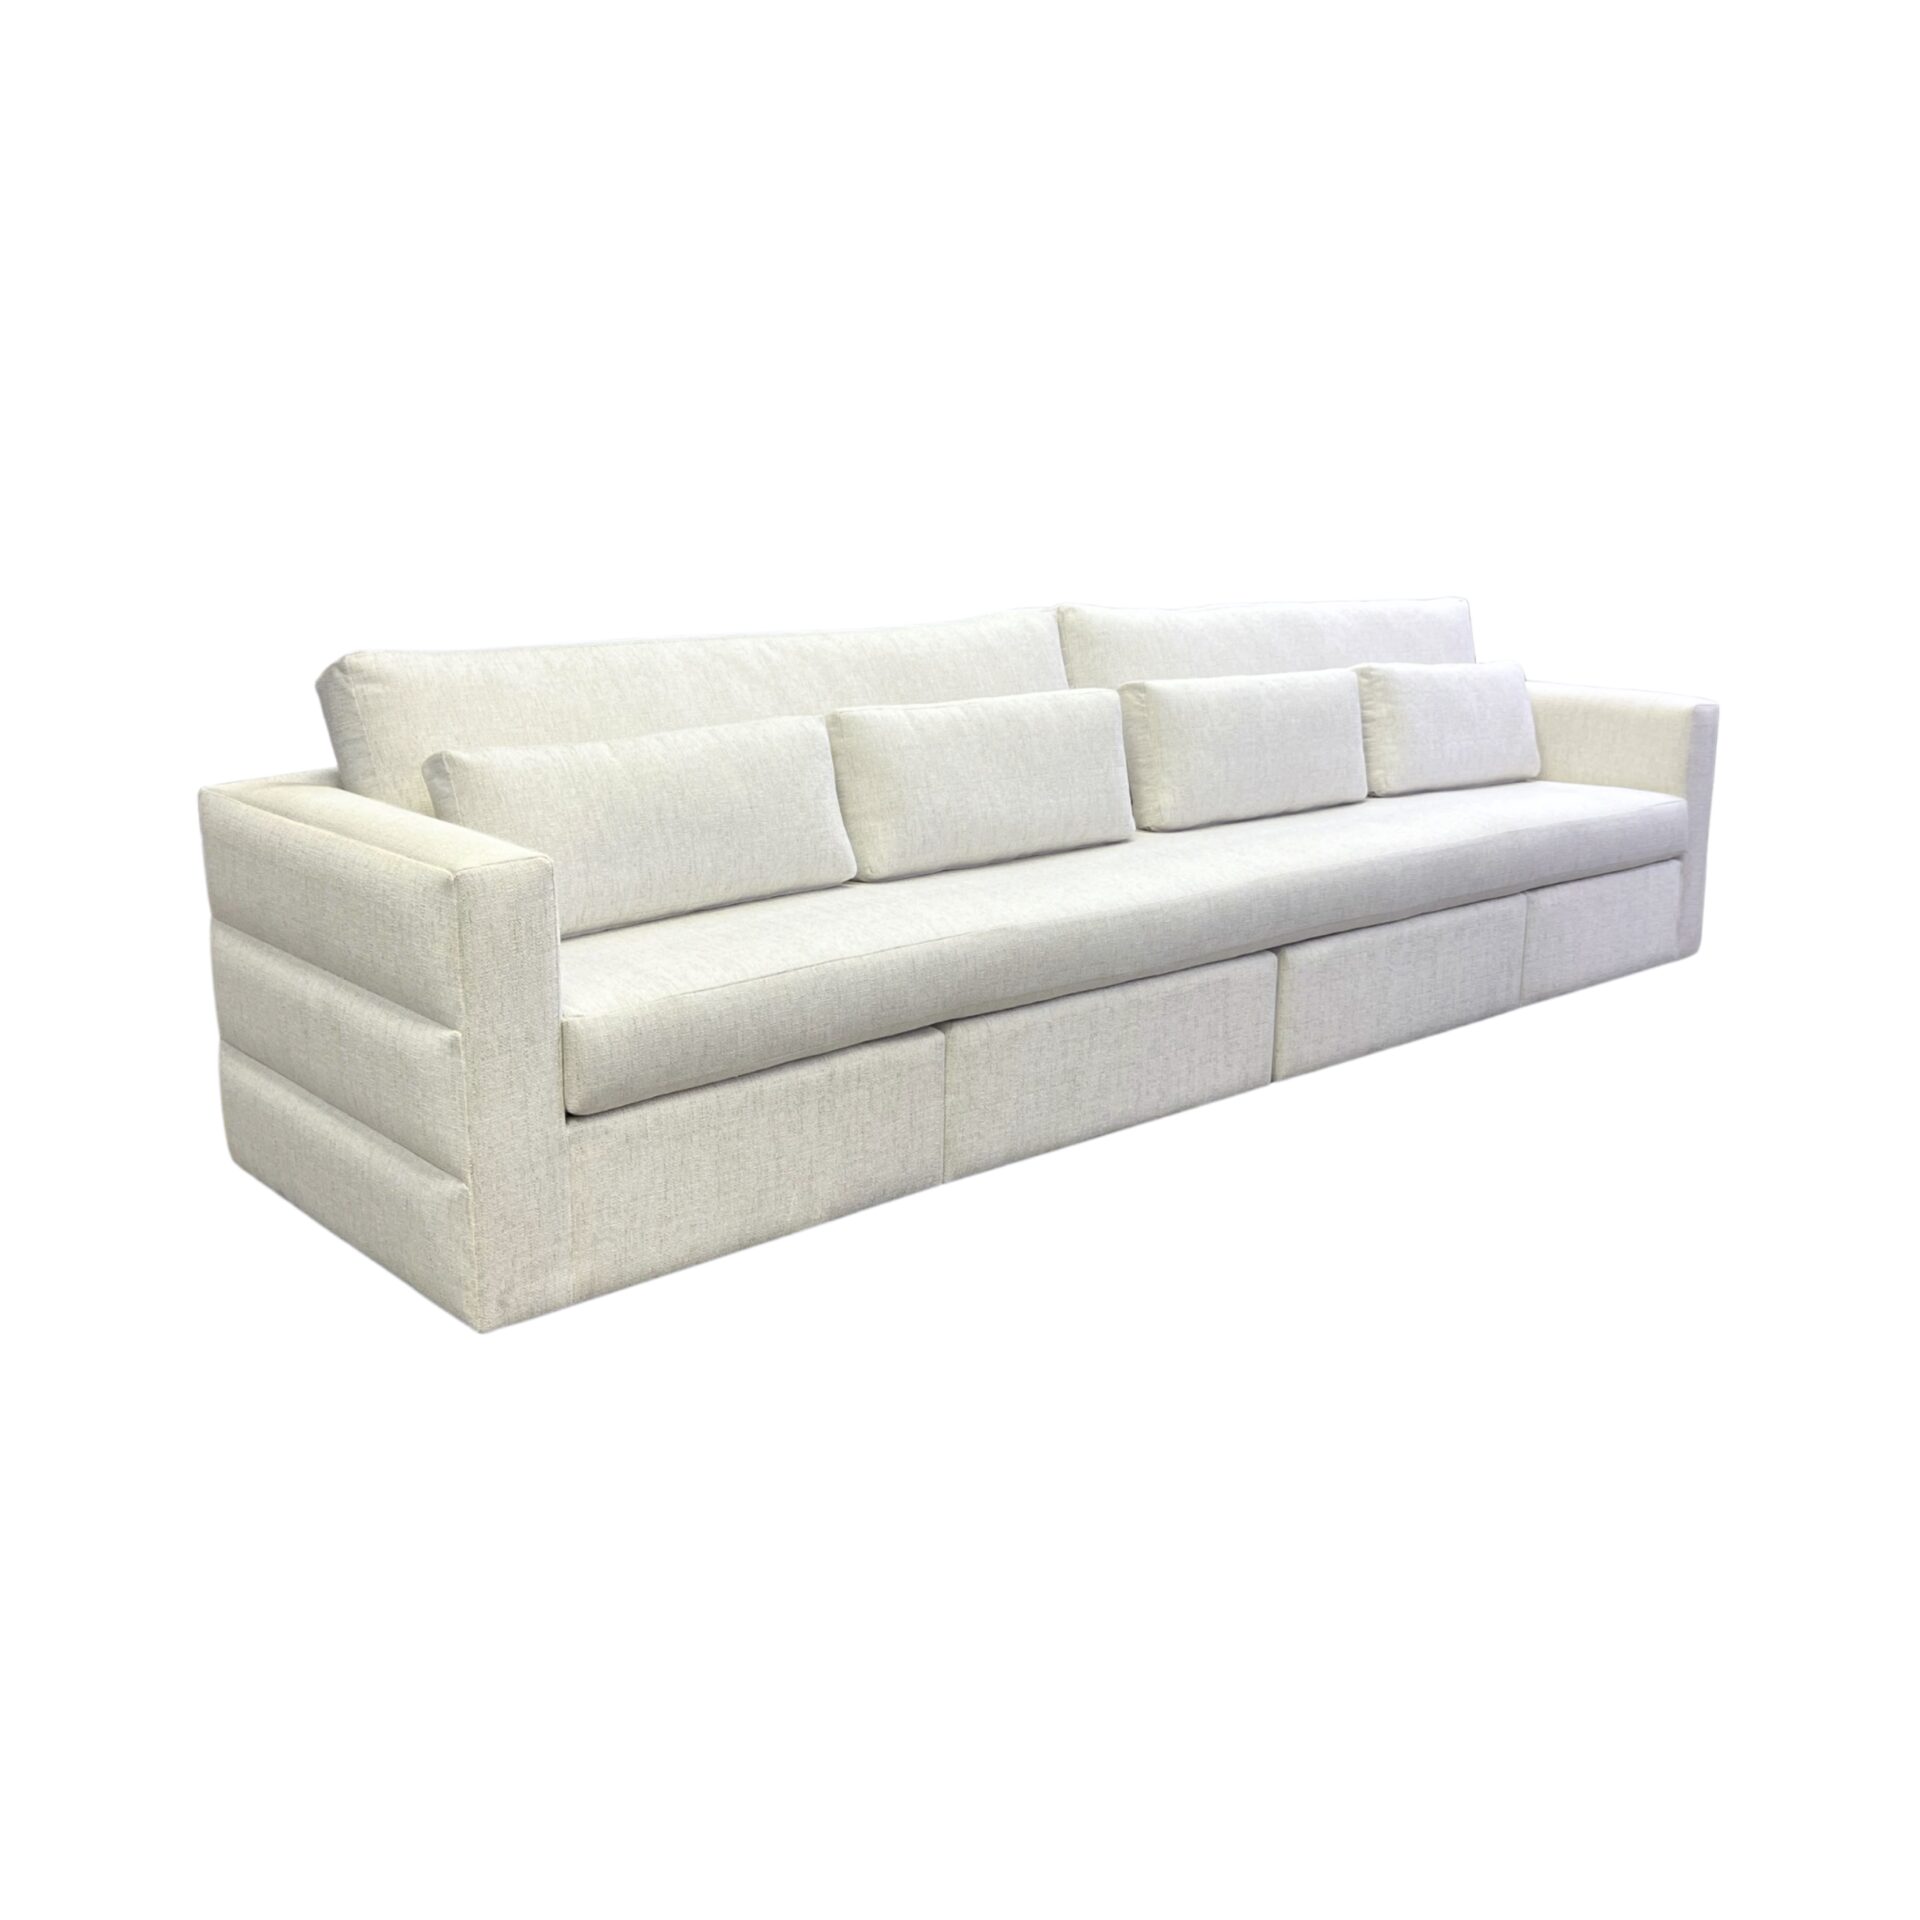 CABANA-upholstered-sofa-luxury-furniture-blend-home-furnishings